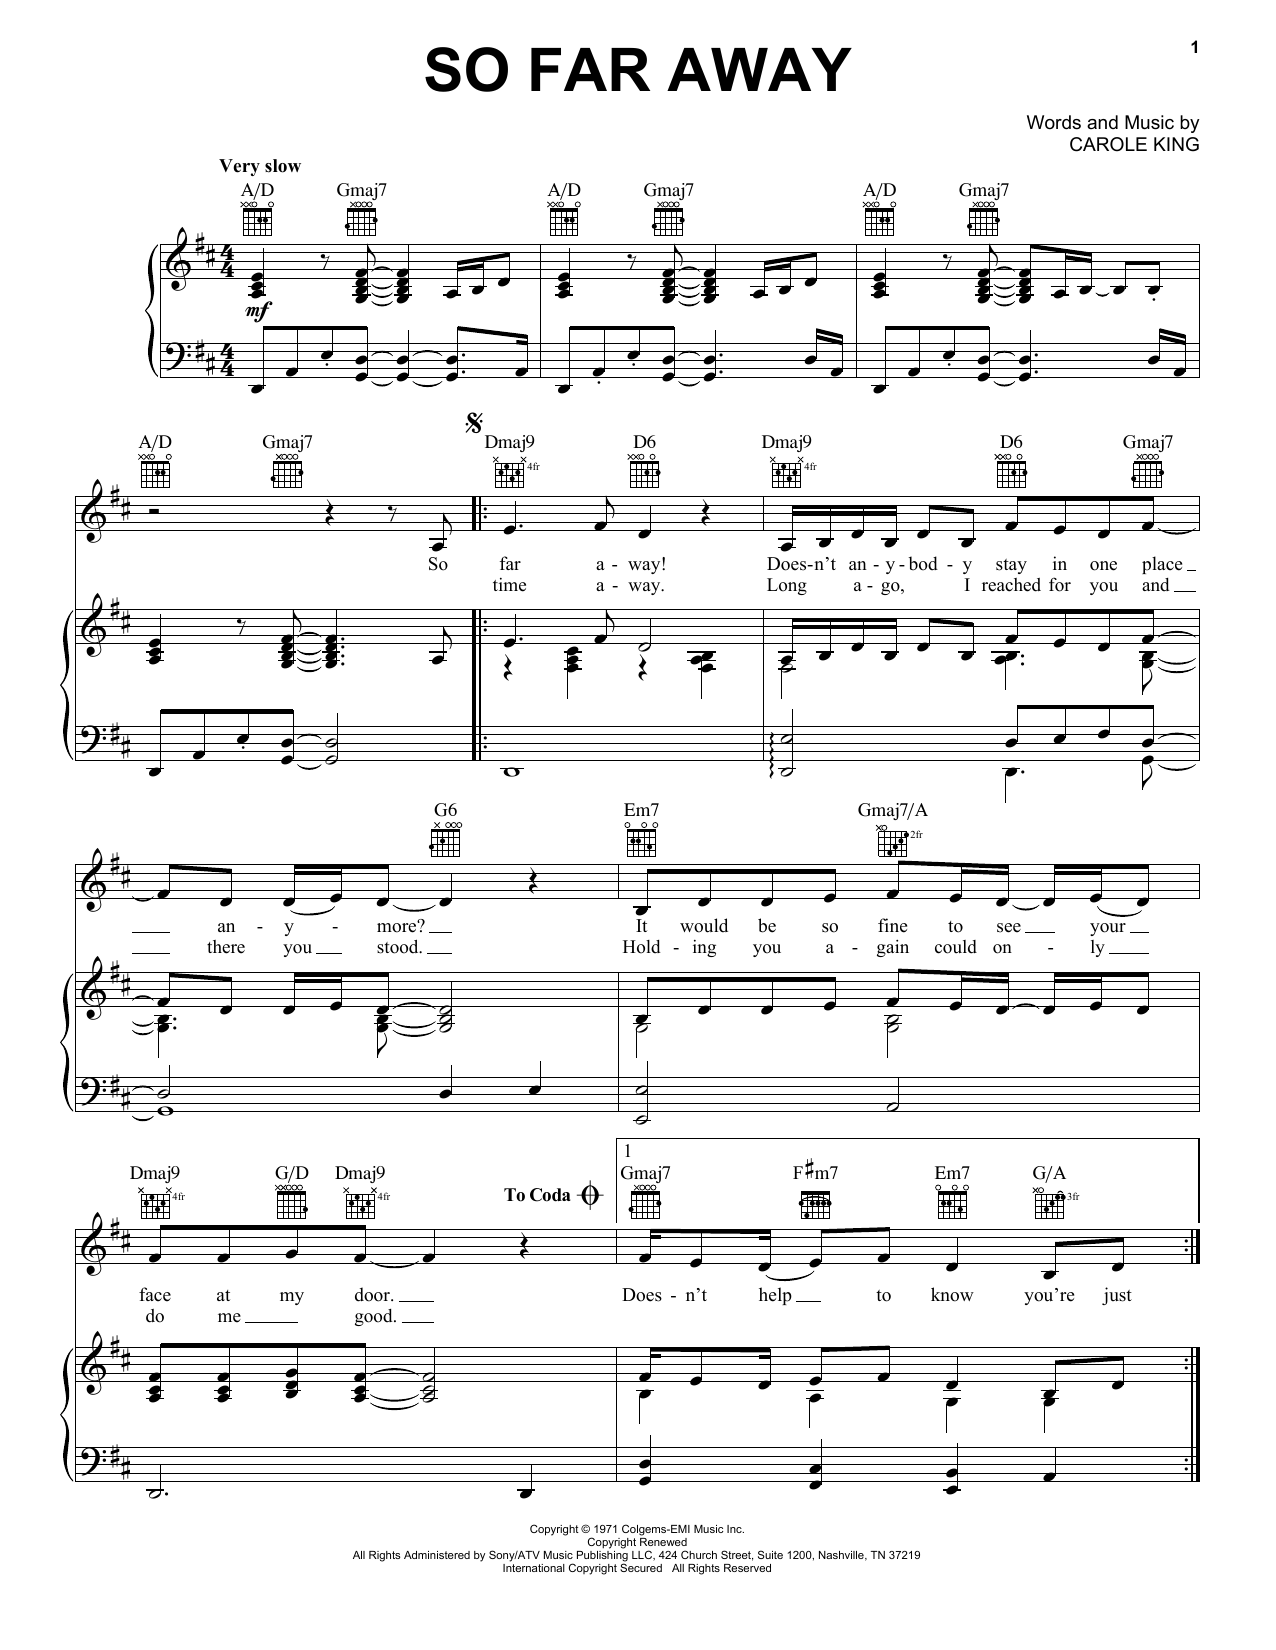 Carole King So Far Away Sheet Music Notes & Chords for Melody Line, Lyrics & Chords - Download or Print PDF